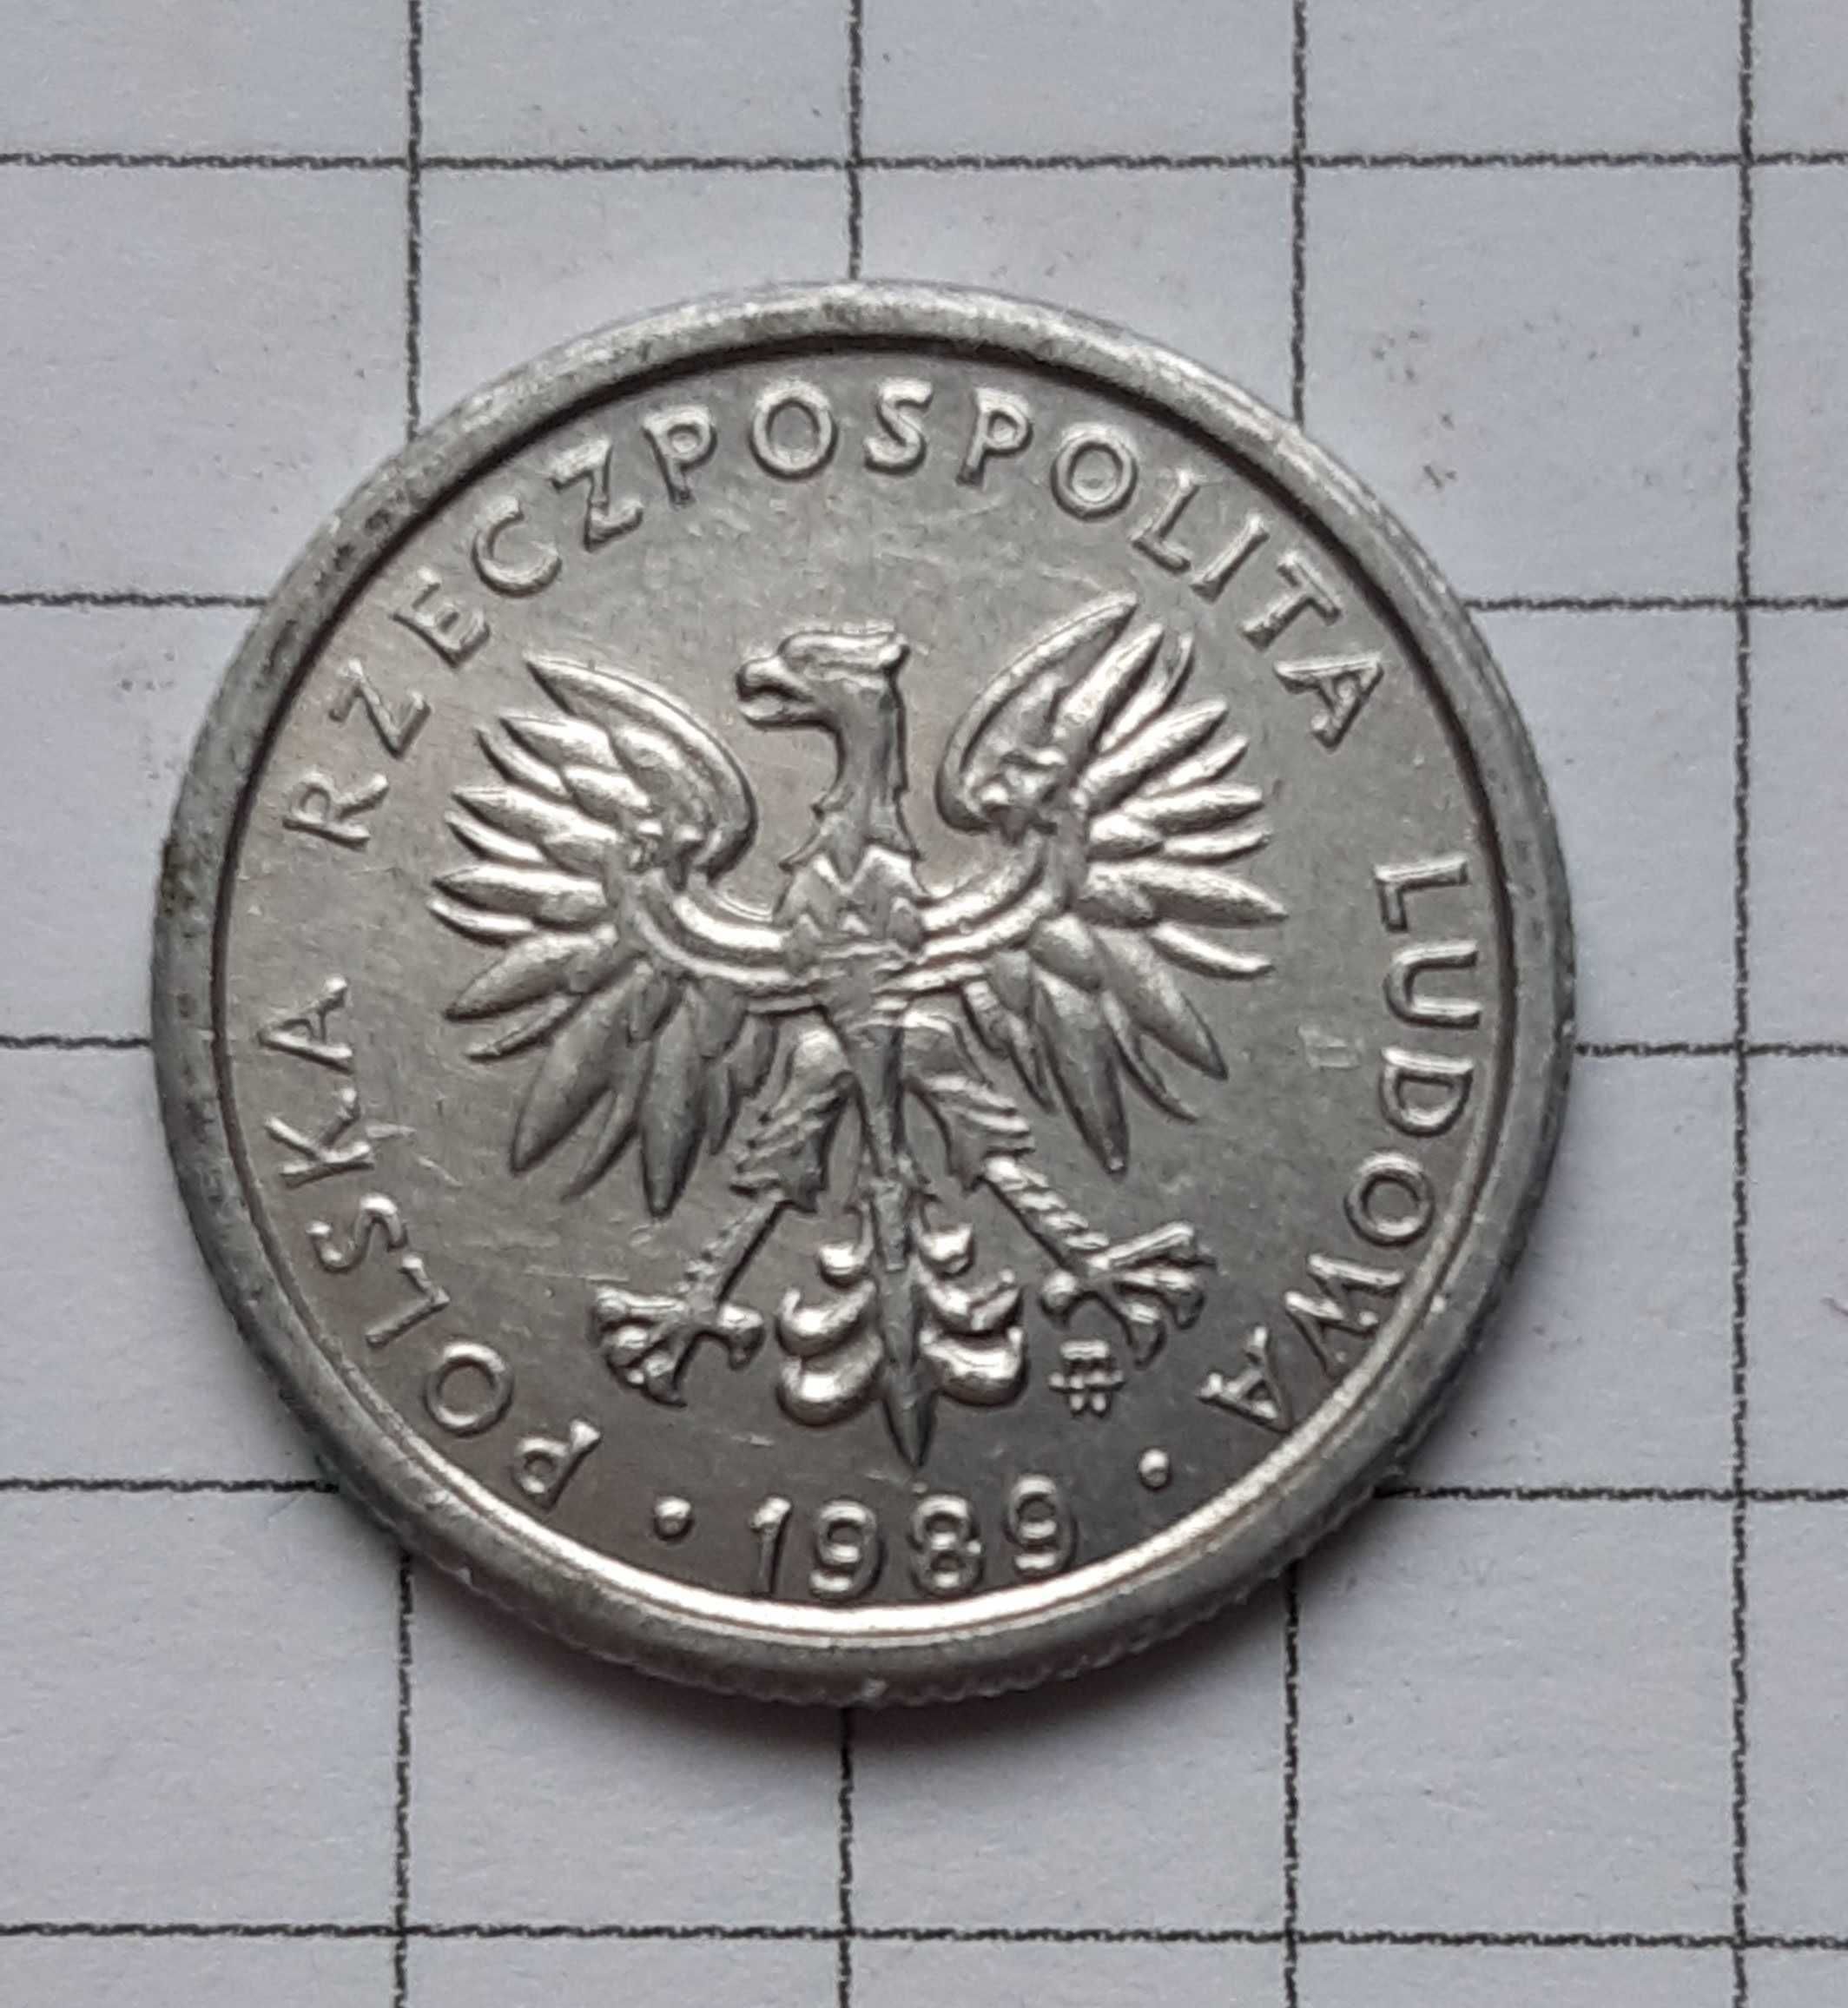 Moneta 1 zł z 1989 roku